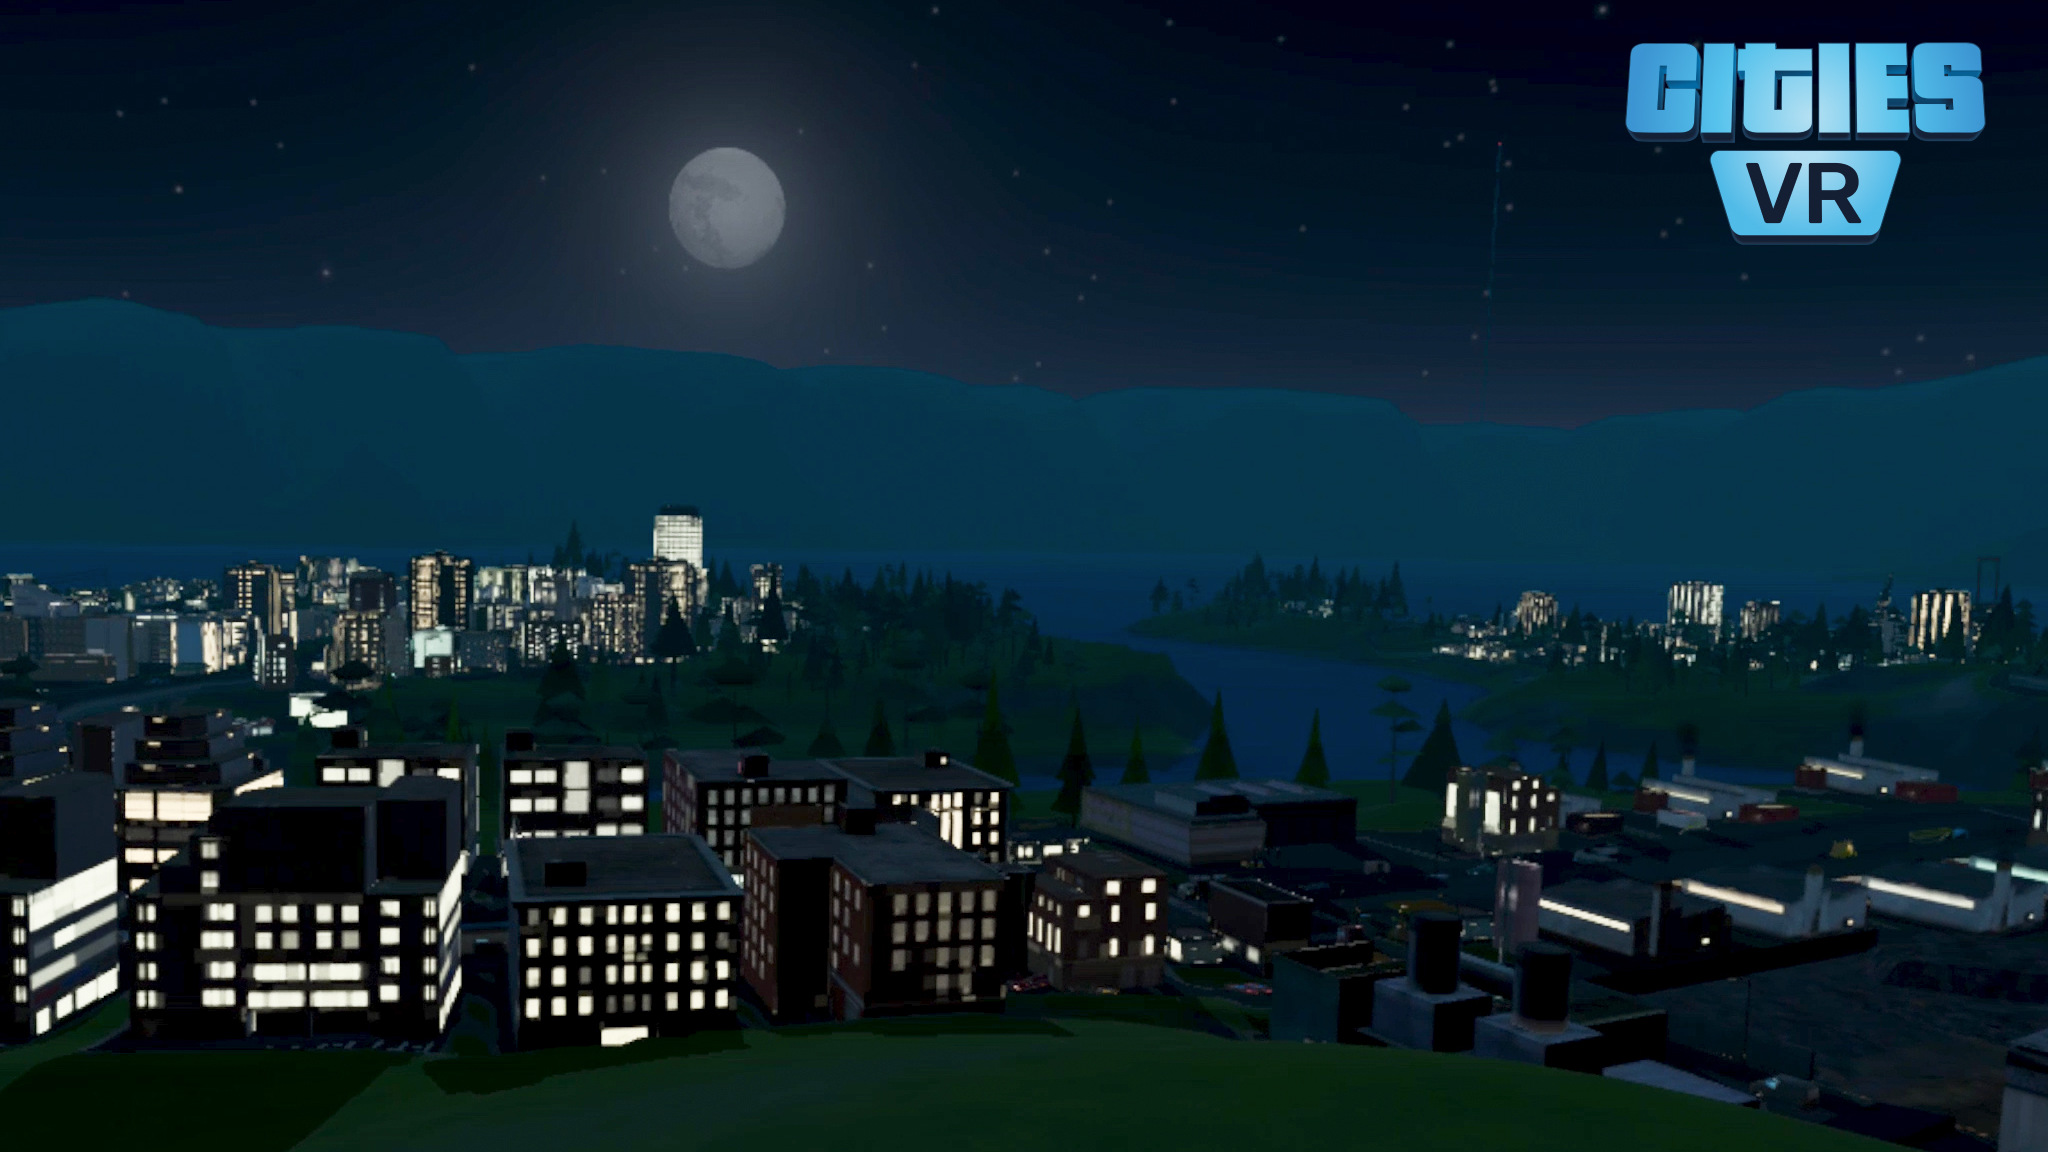 Screenshot of a city lit up at night